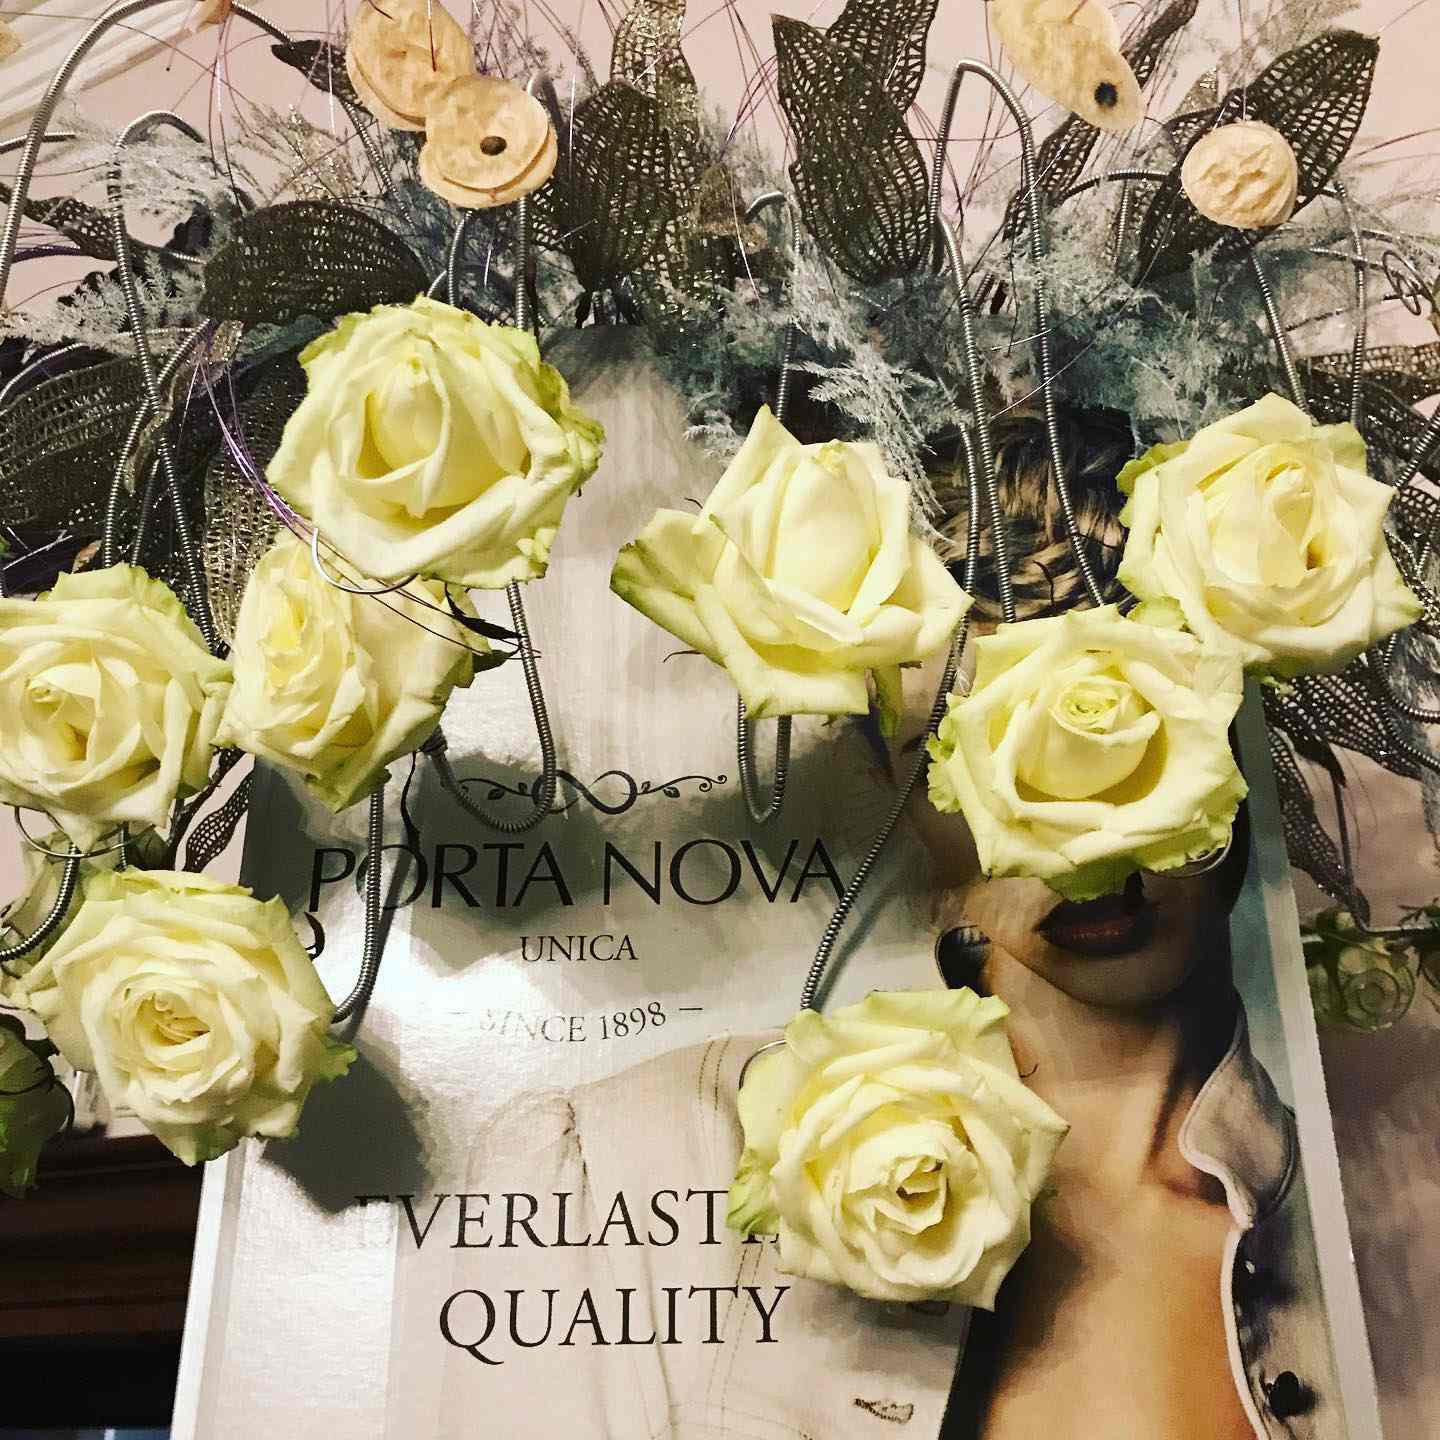 Porta Nova floral Haute Couture at the Winter moments 2019 event